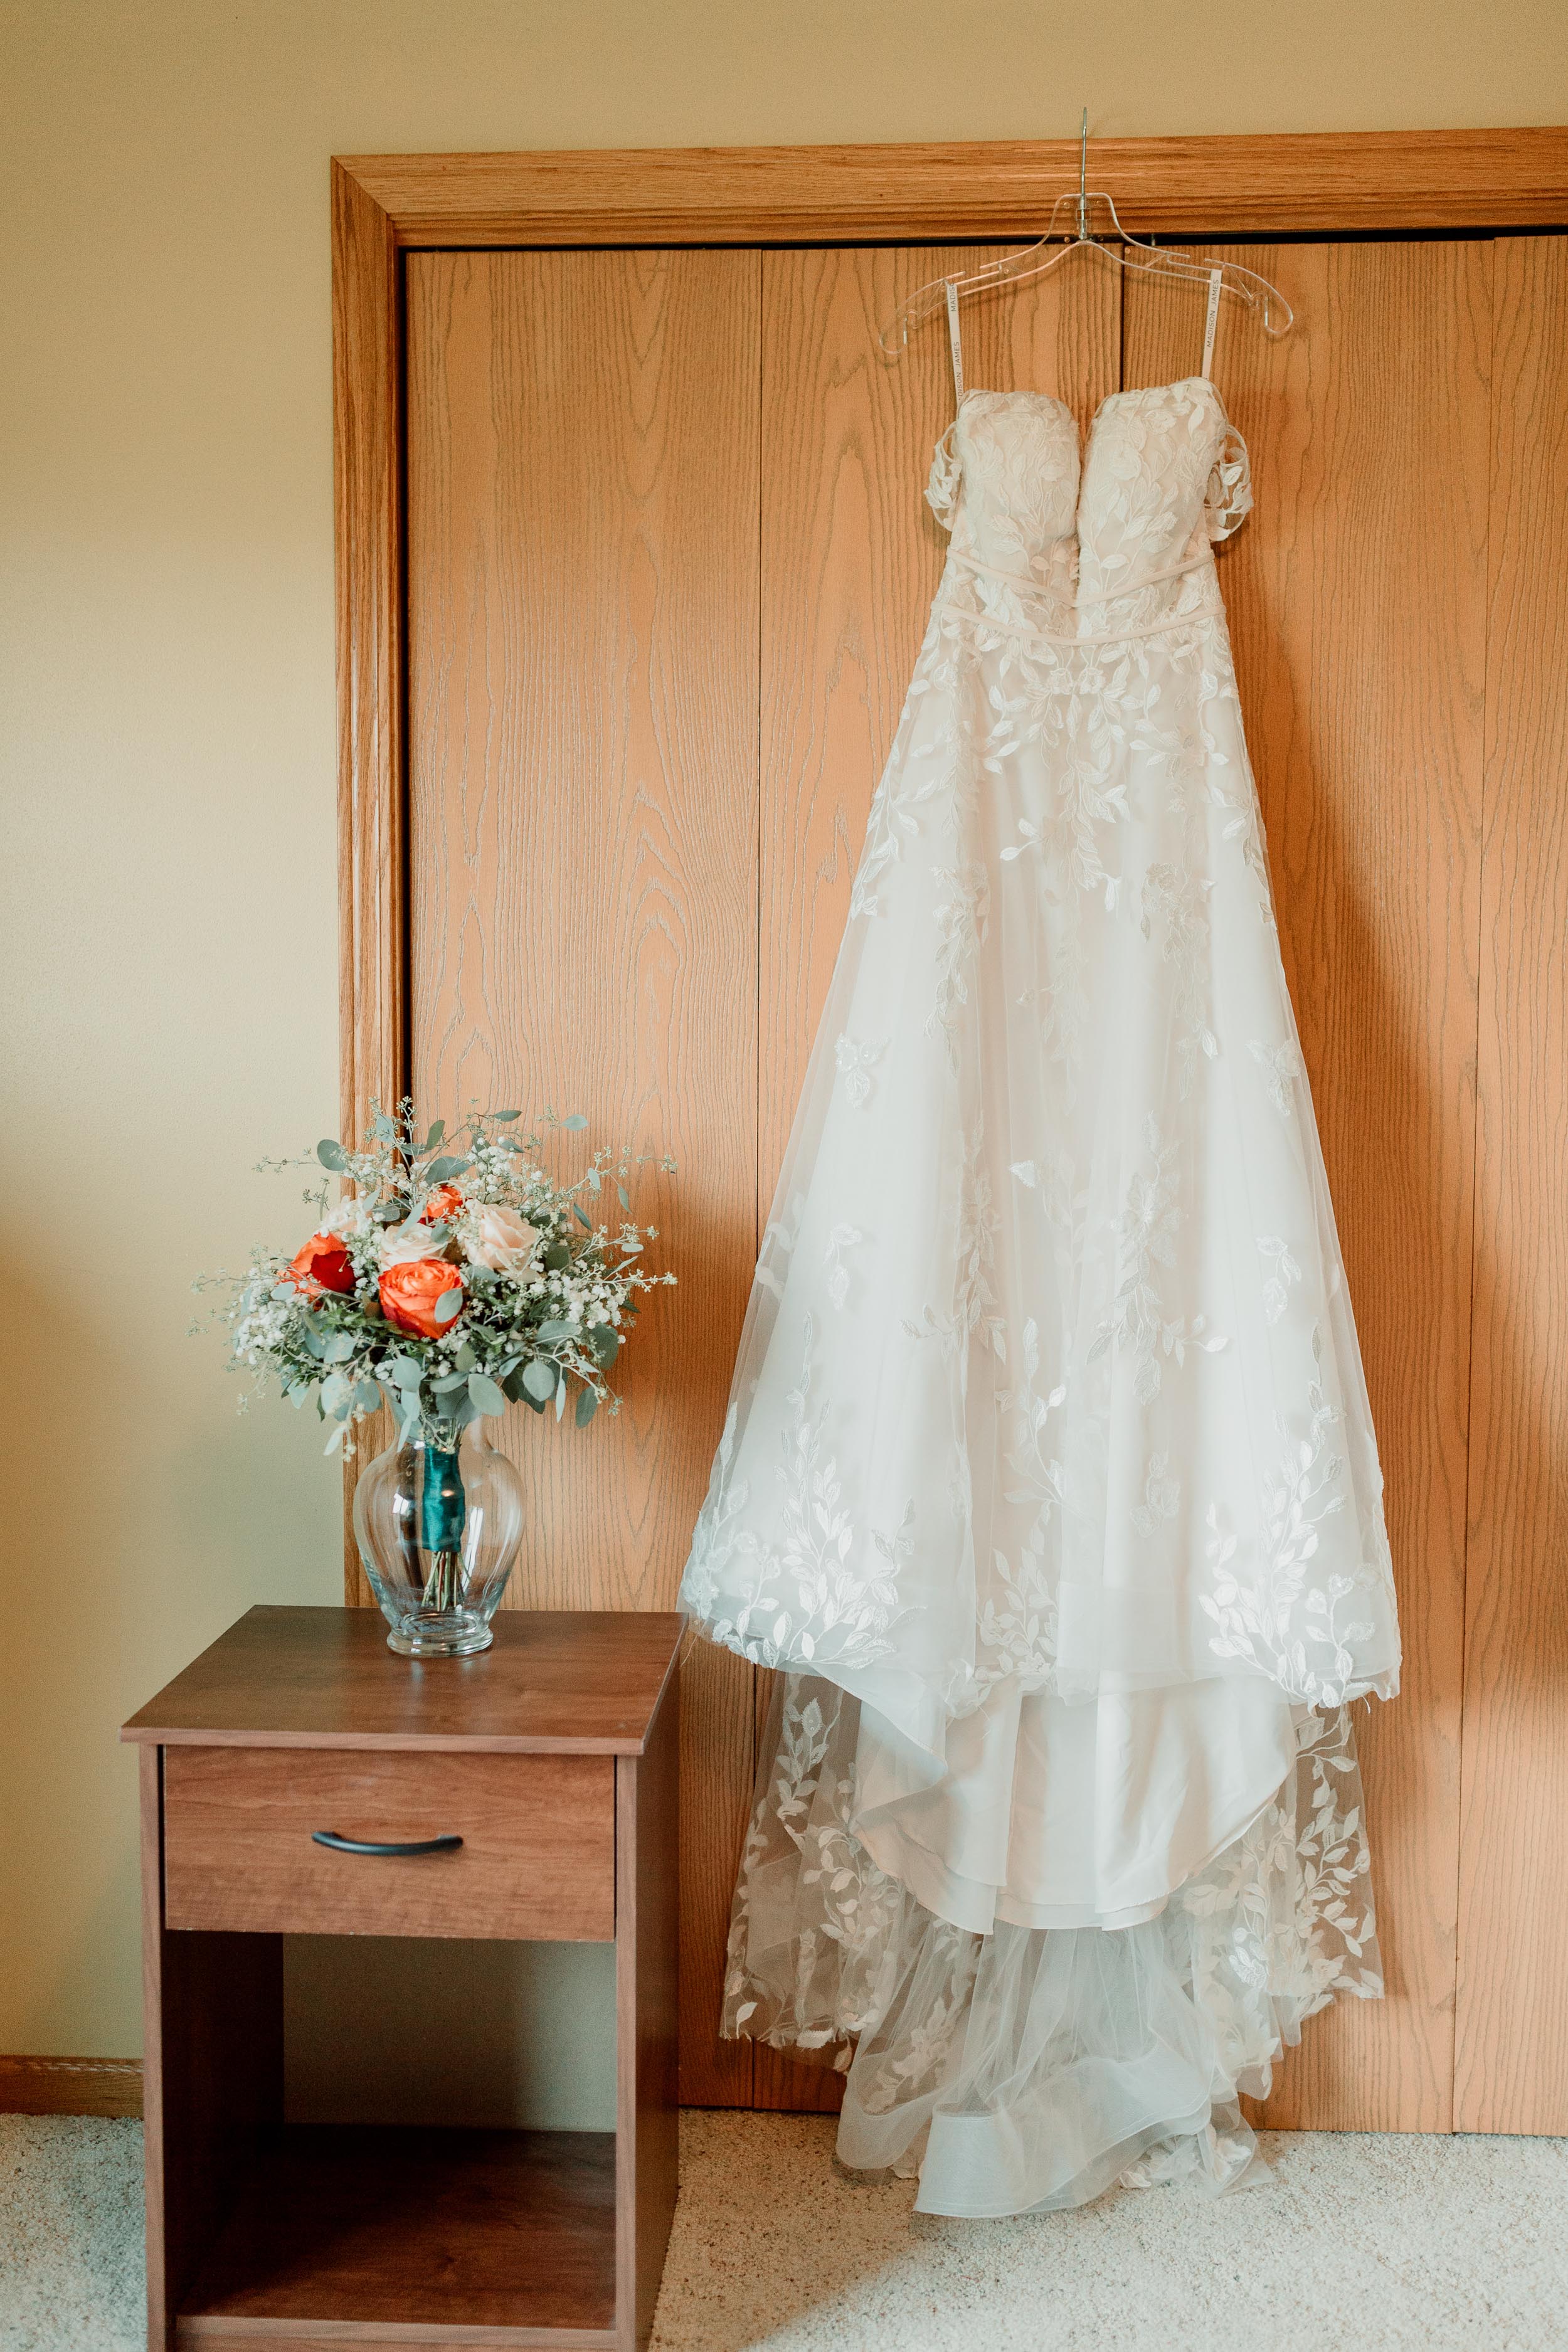 Lace wedding dress and orange wedding bouquet | Rockford Illinois Wedding Photographer
